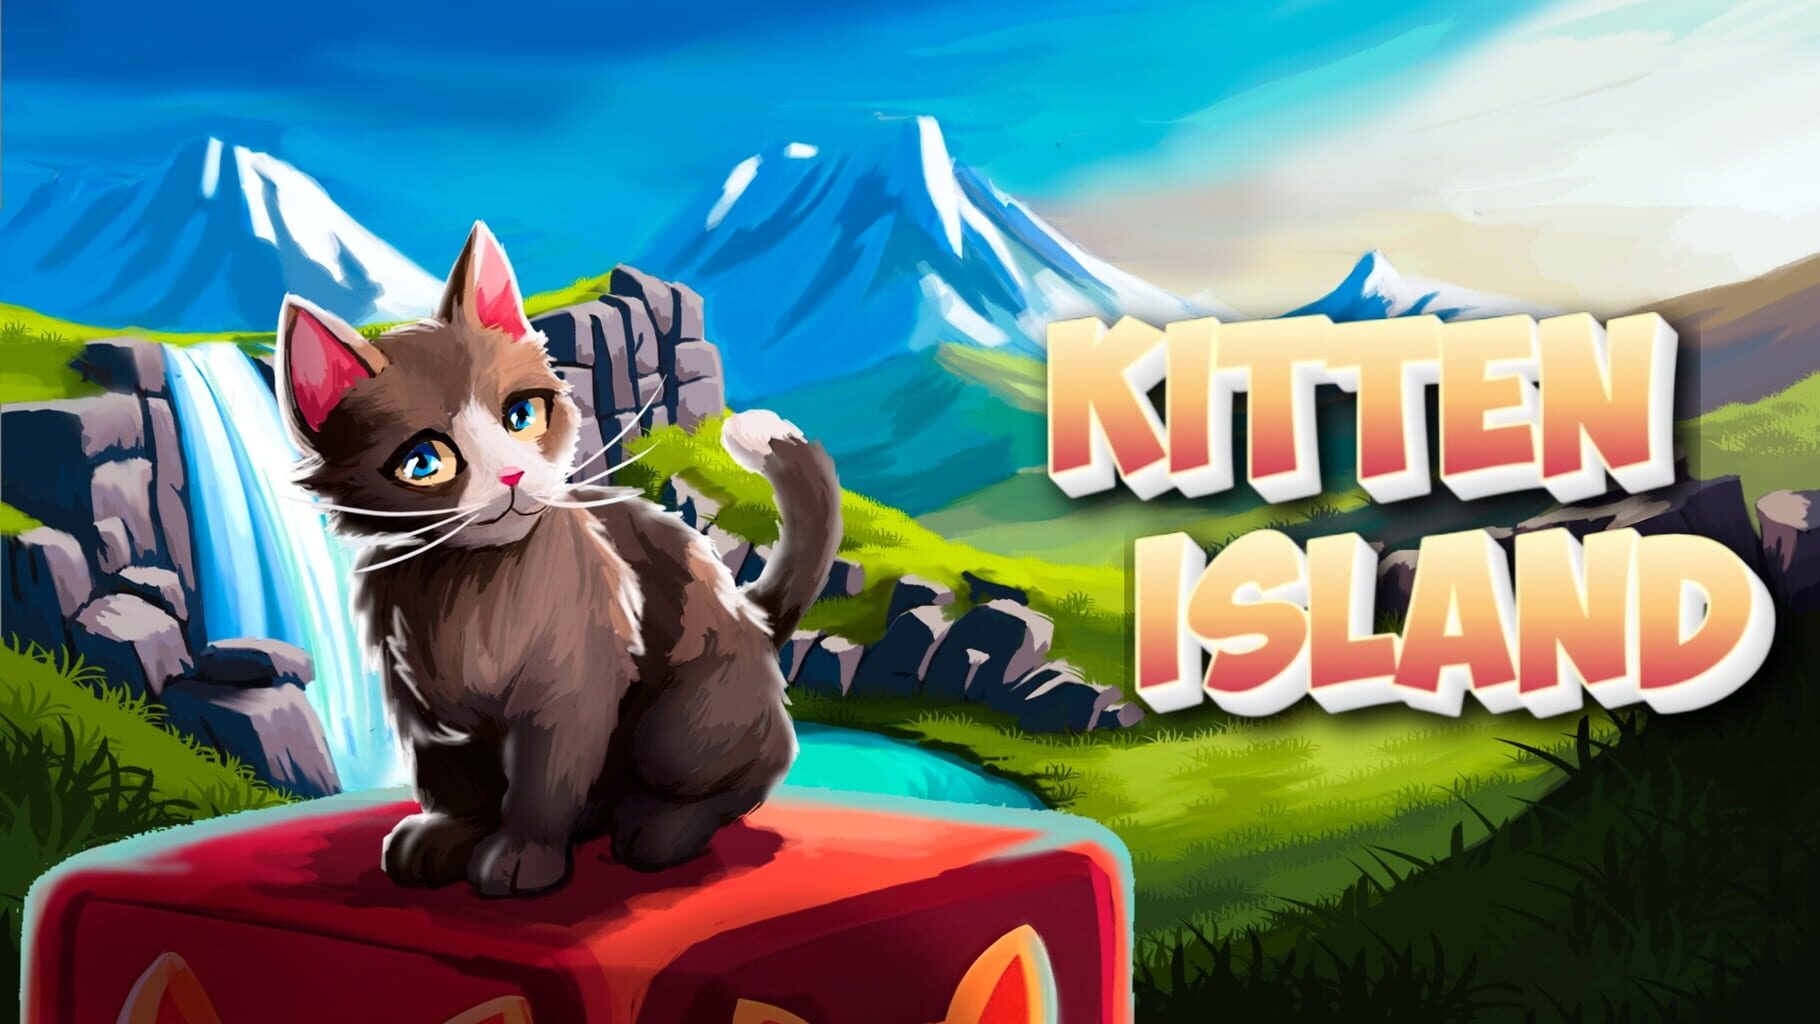 Arte - Kitten Island